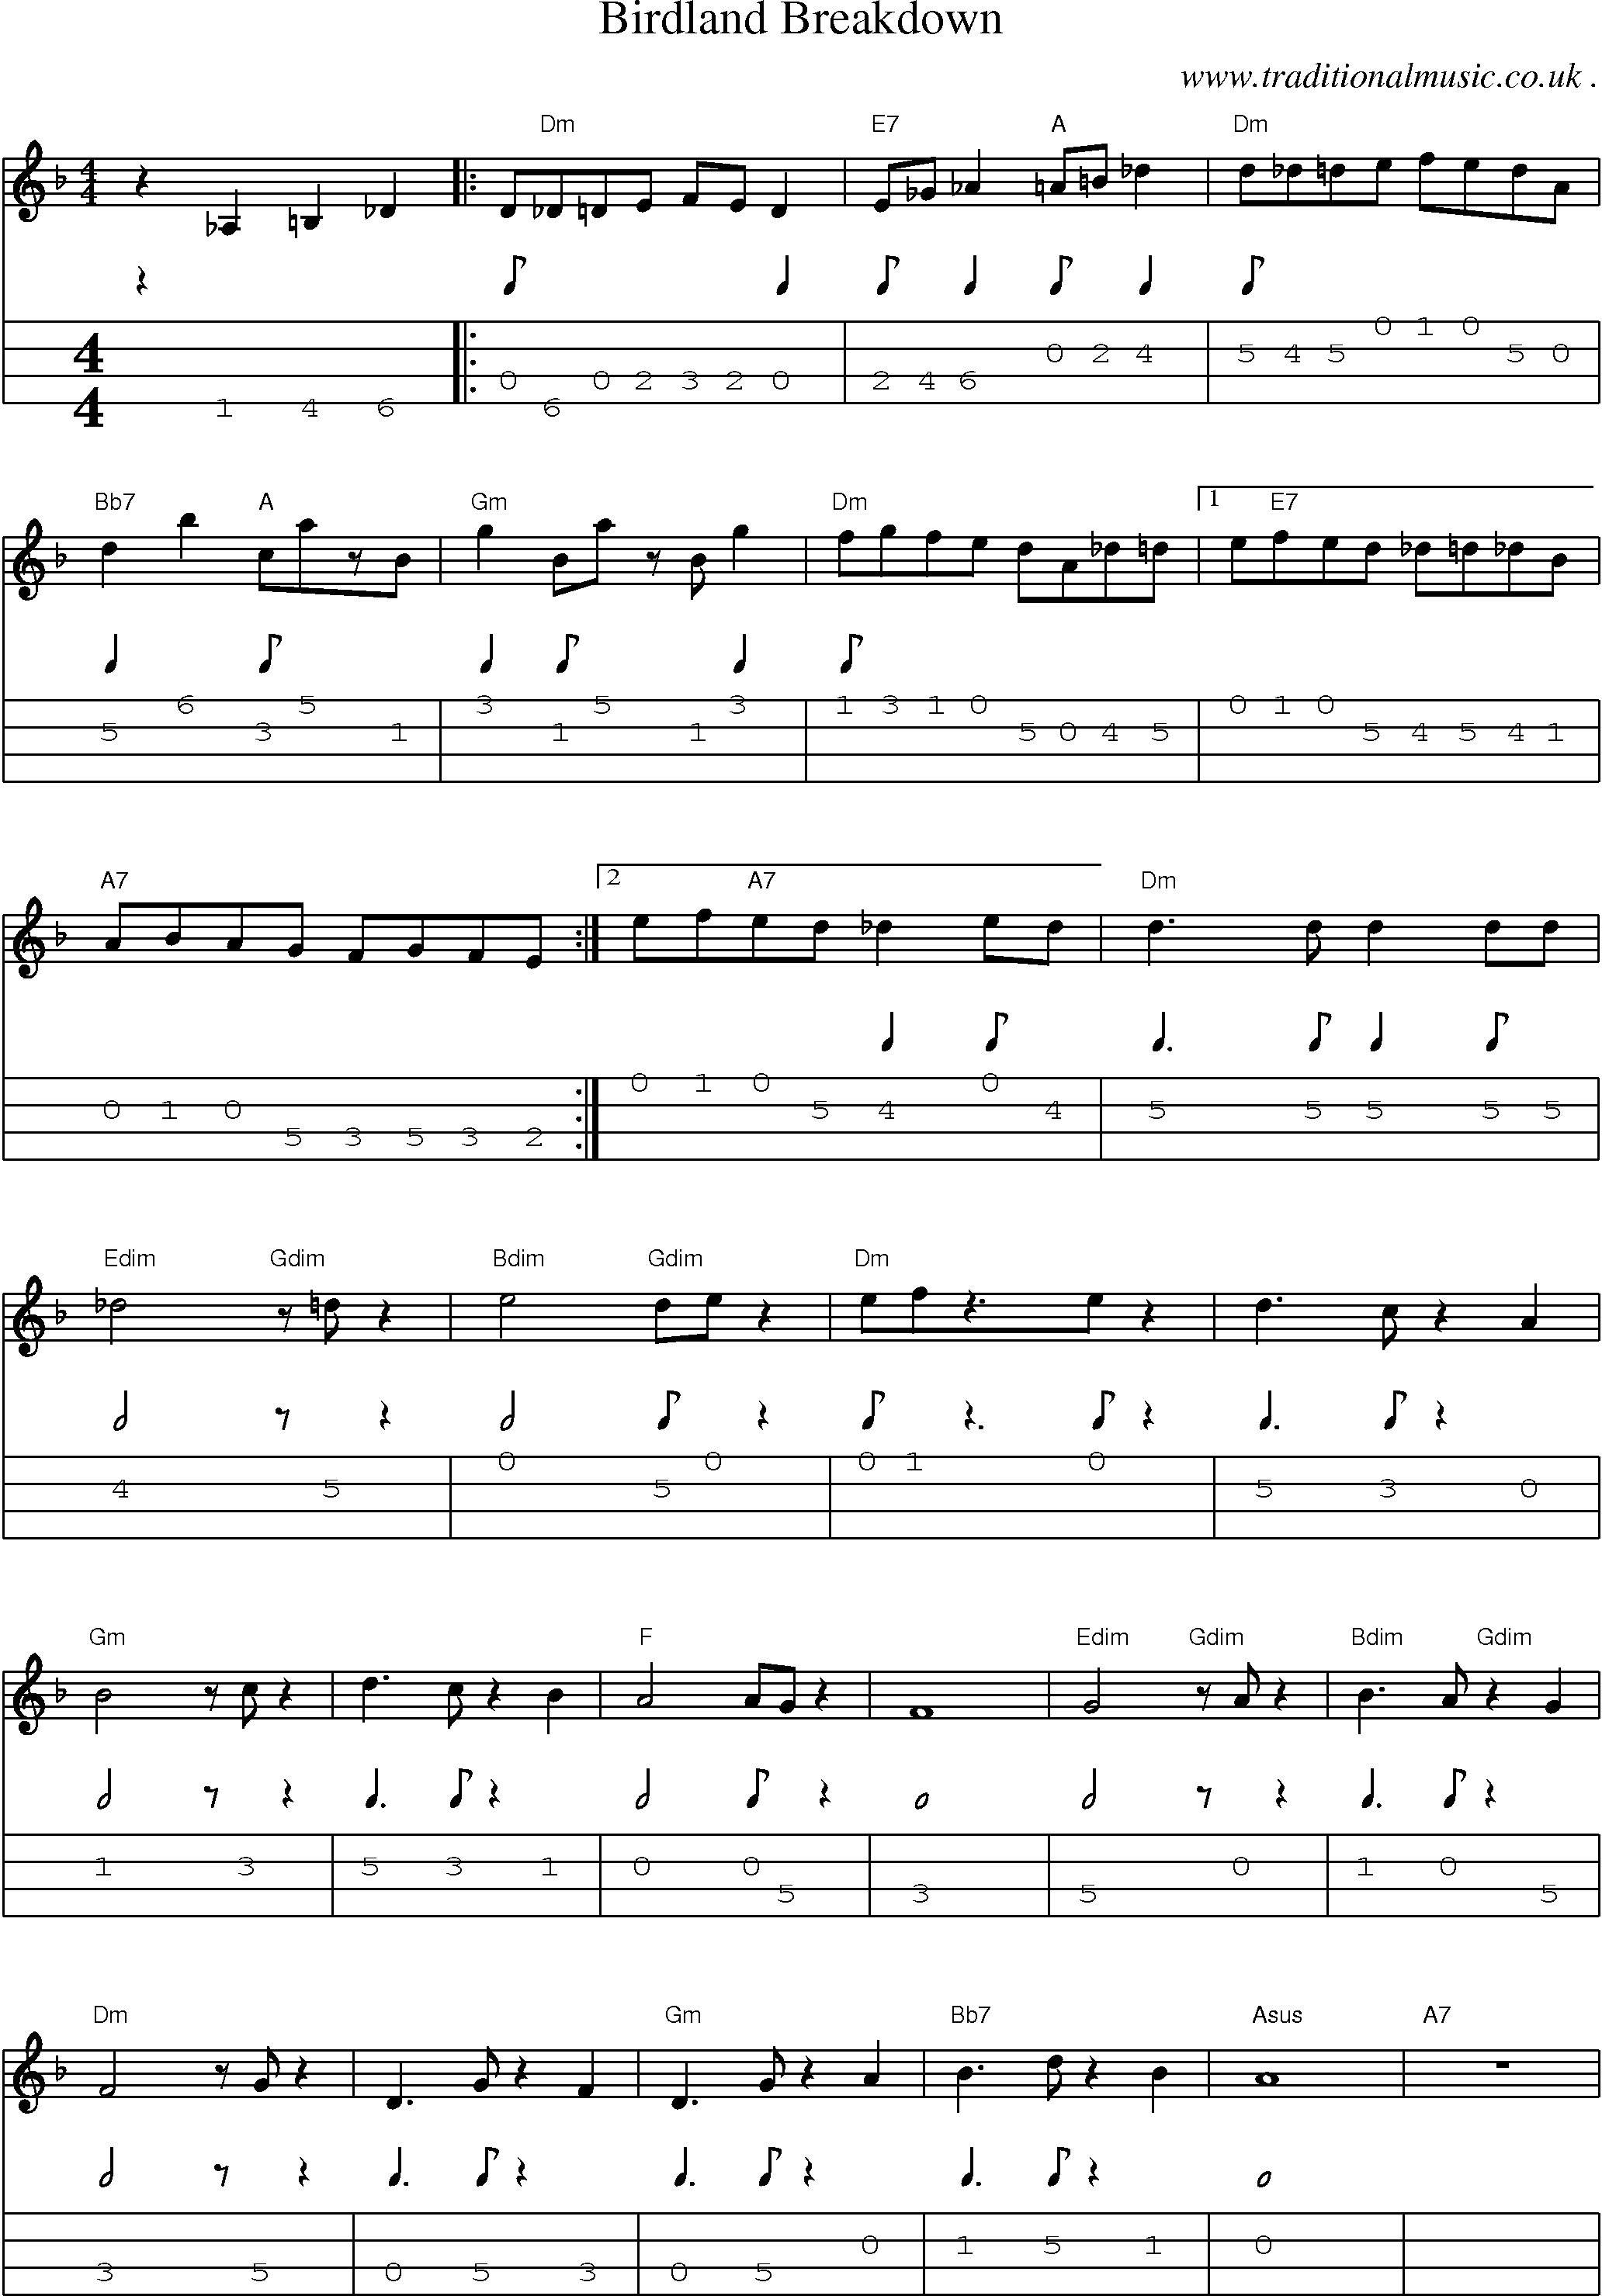 Music Score and Mandolin Tabs for Birdland Breakdown